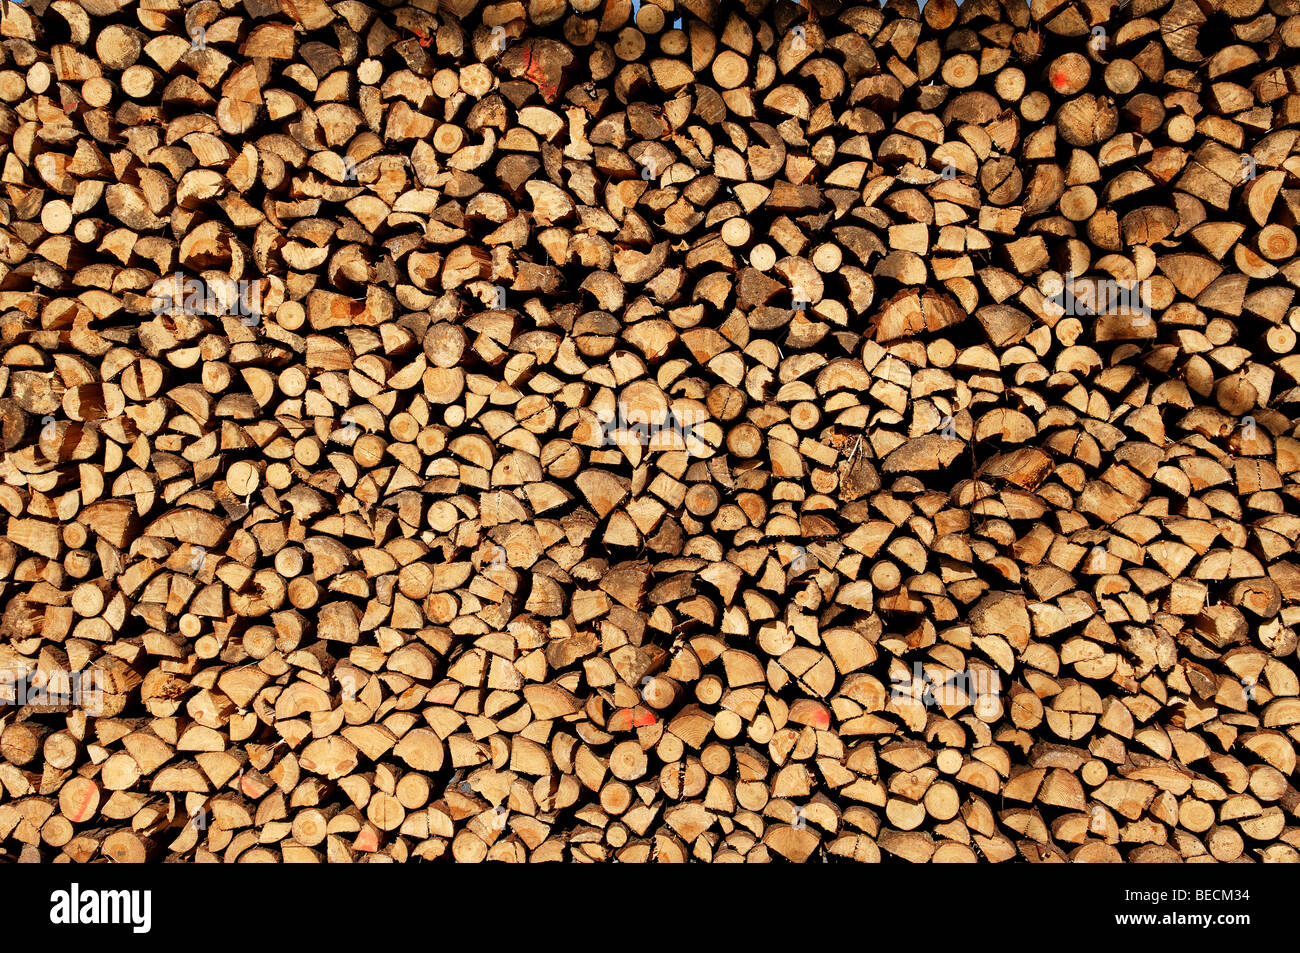 Piled up fire wood, Buch, Nuremberg, Franconia, Bavaria, Germany, Stock Photo